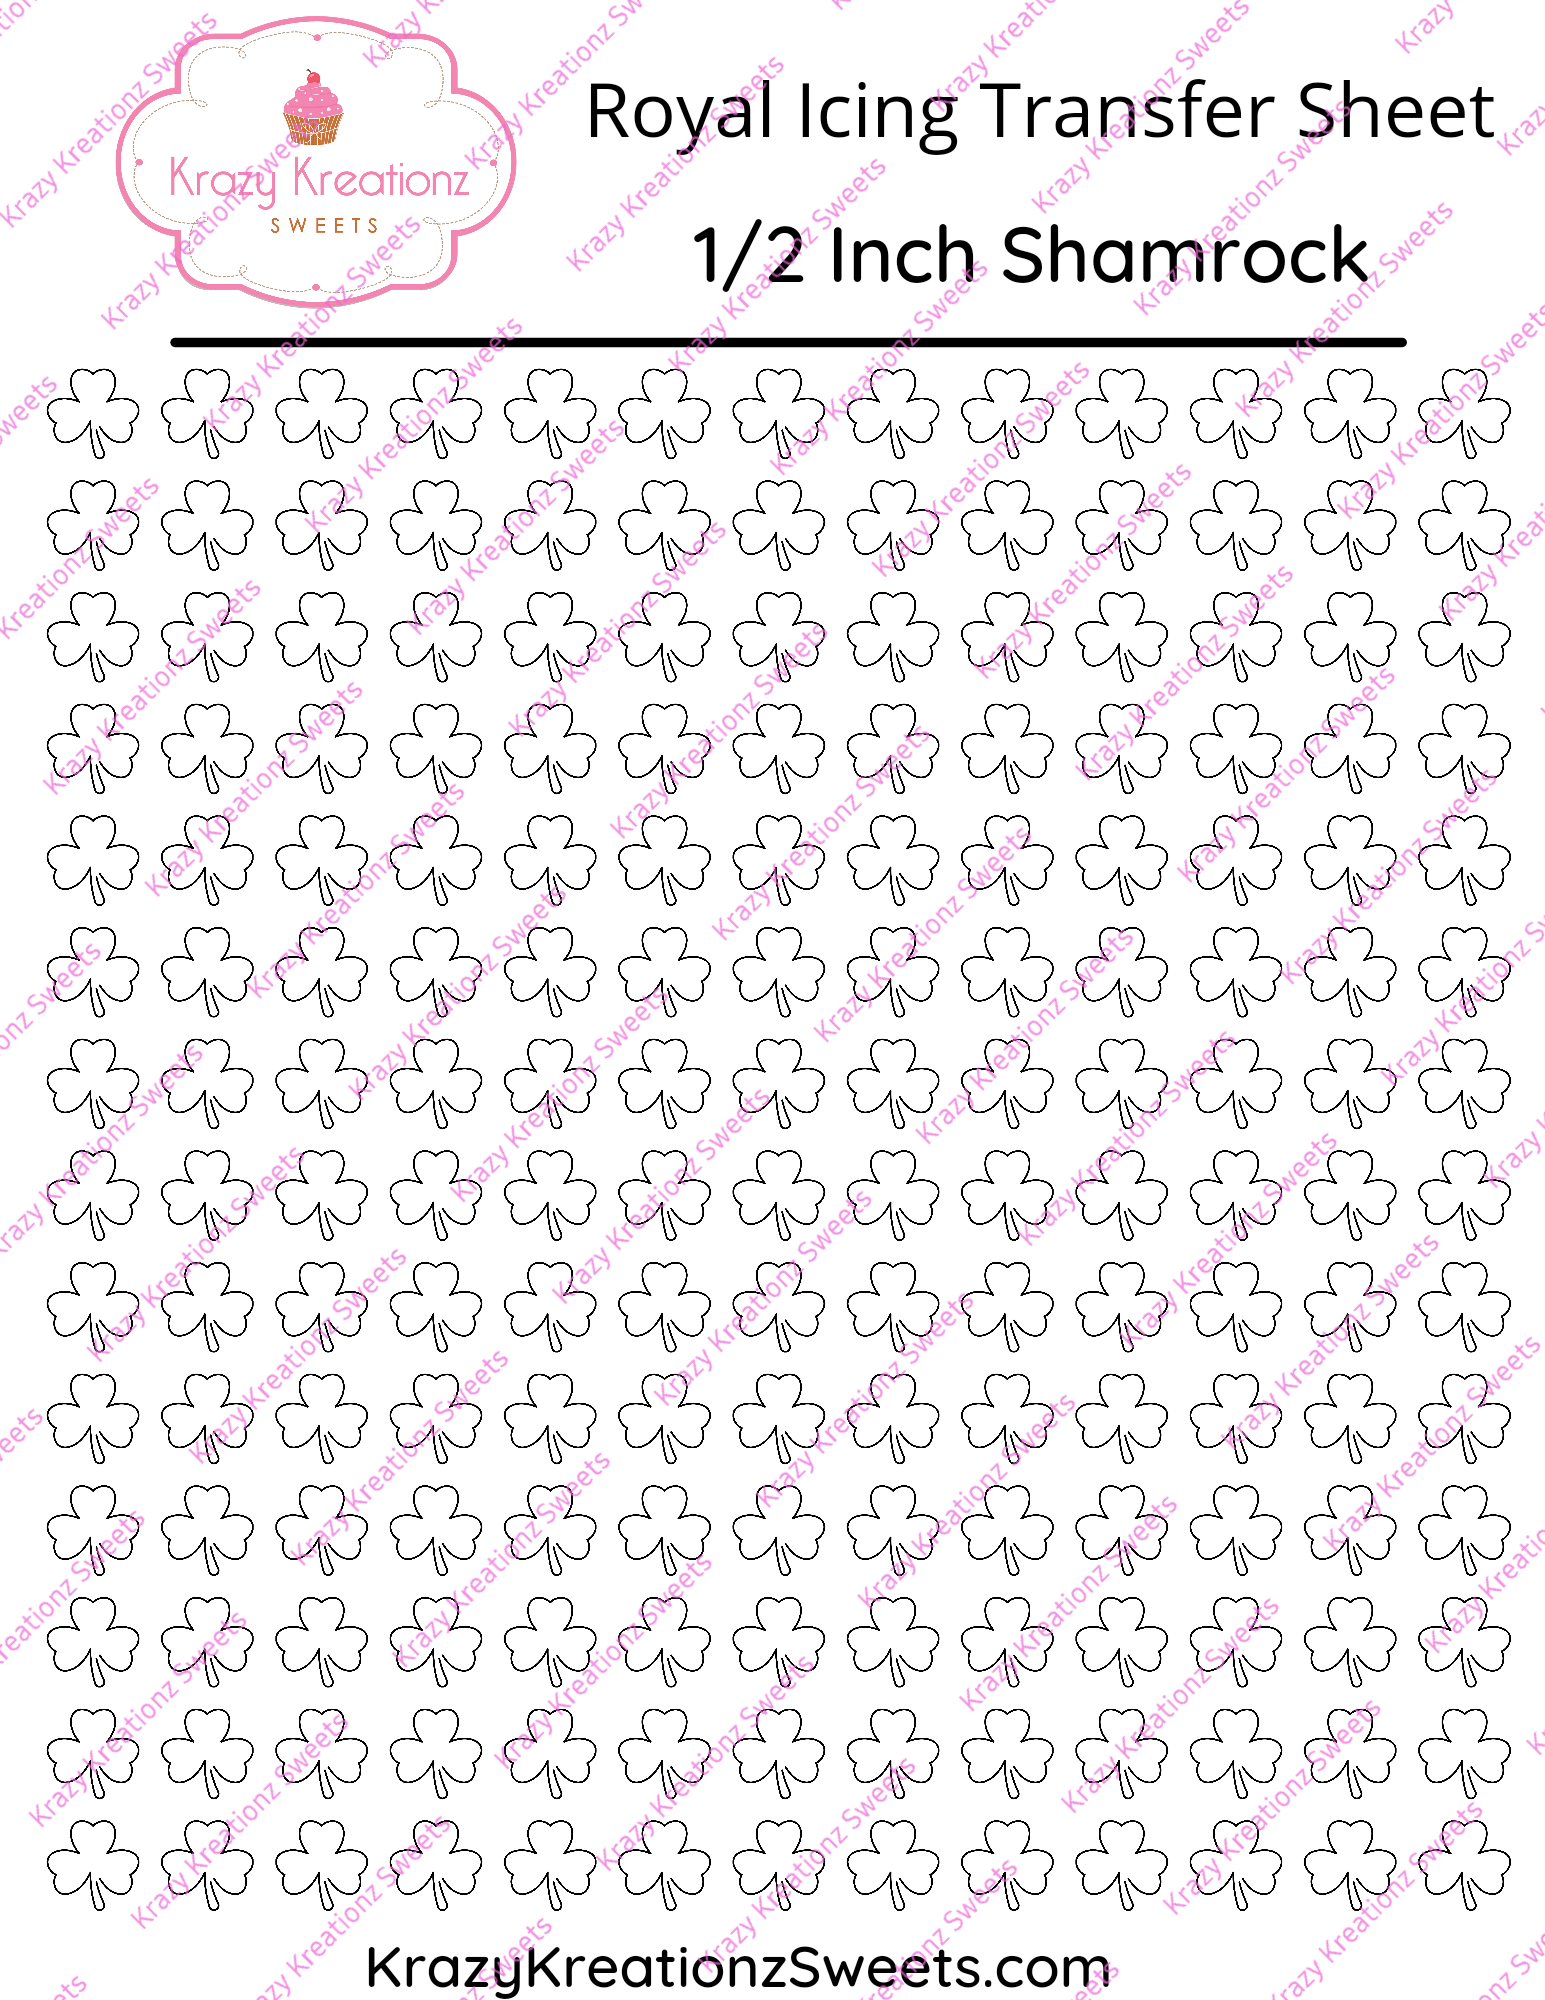 1/2 inch Shamrock Royal Icing Transfer Sheet